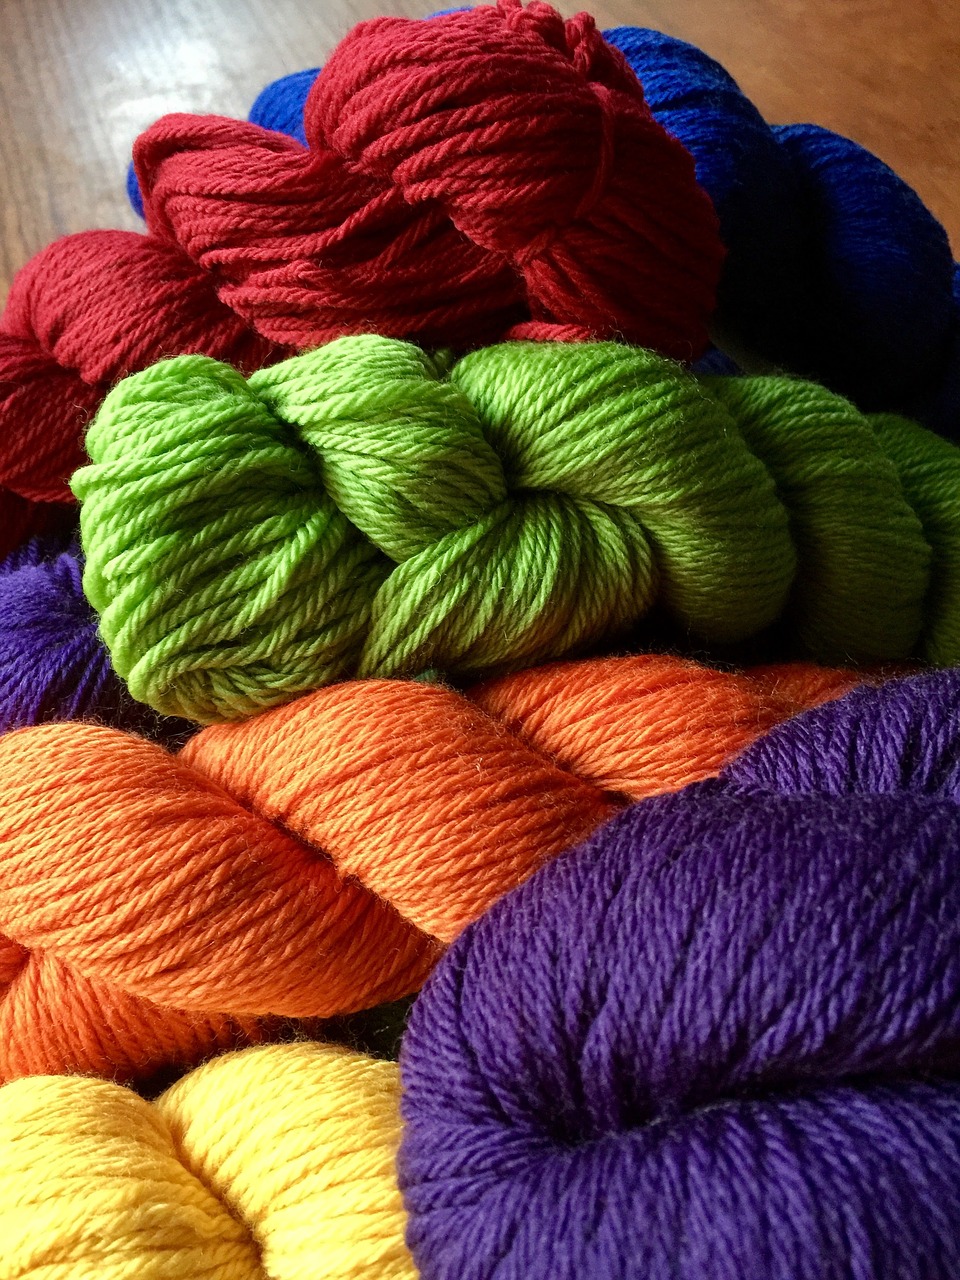 yarn knitting crochet free photo